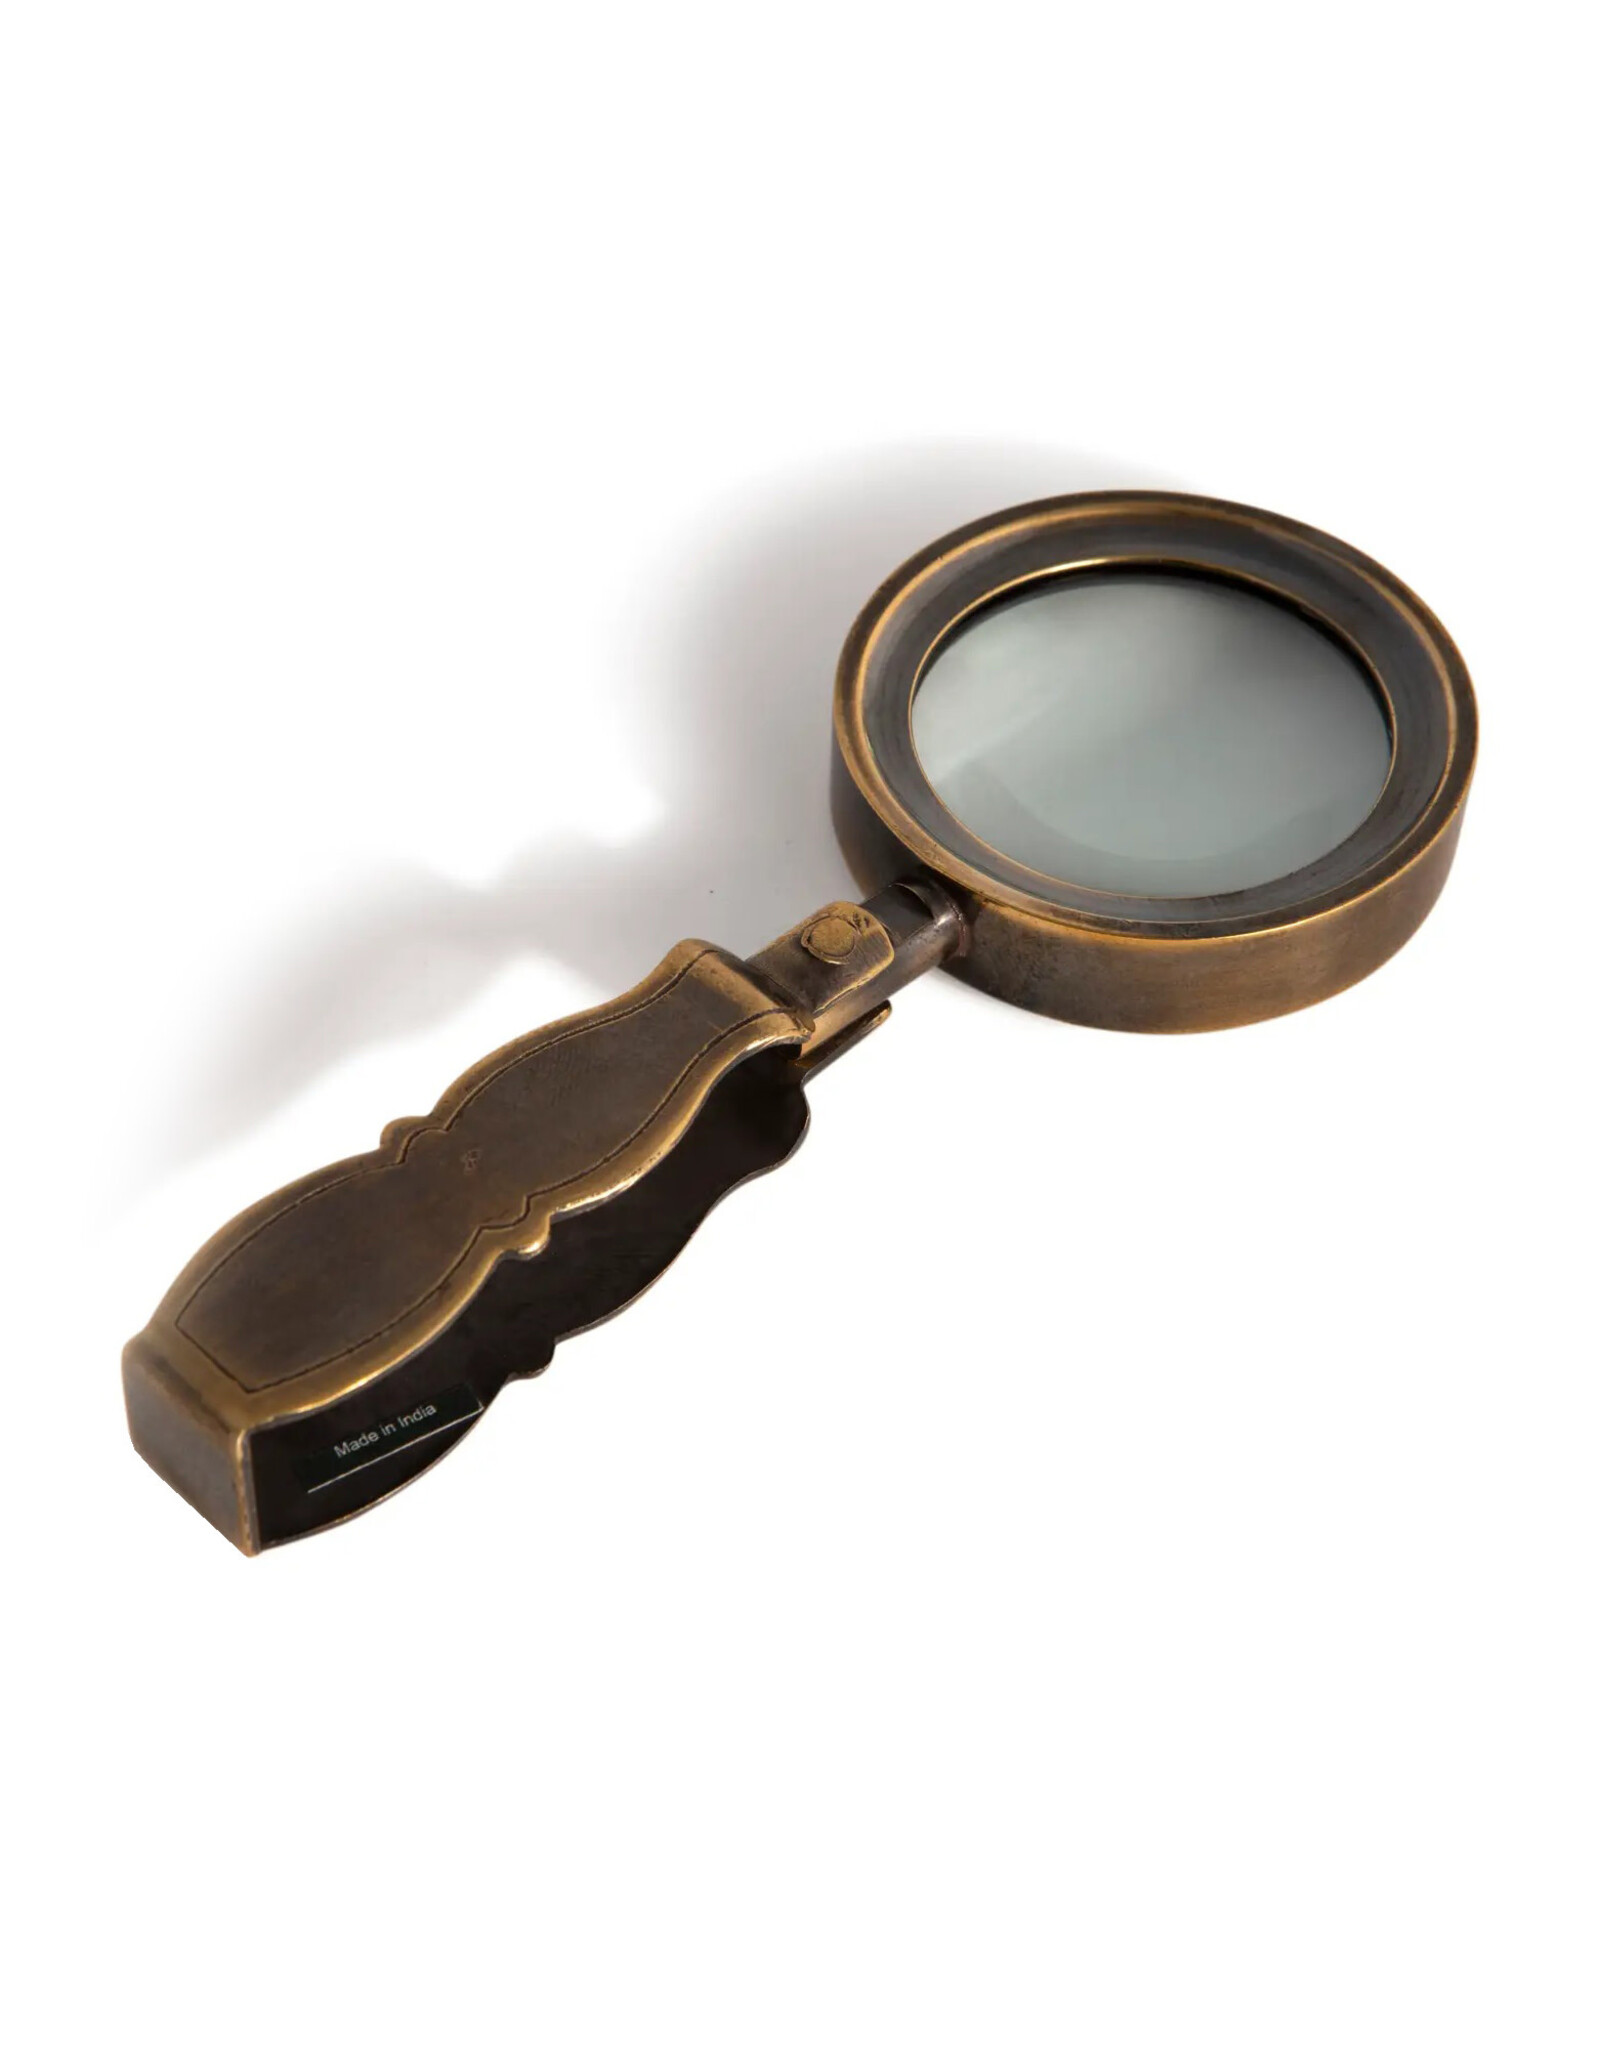 Authentic Models Vintage-Style Travel Magnifier